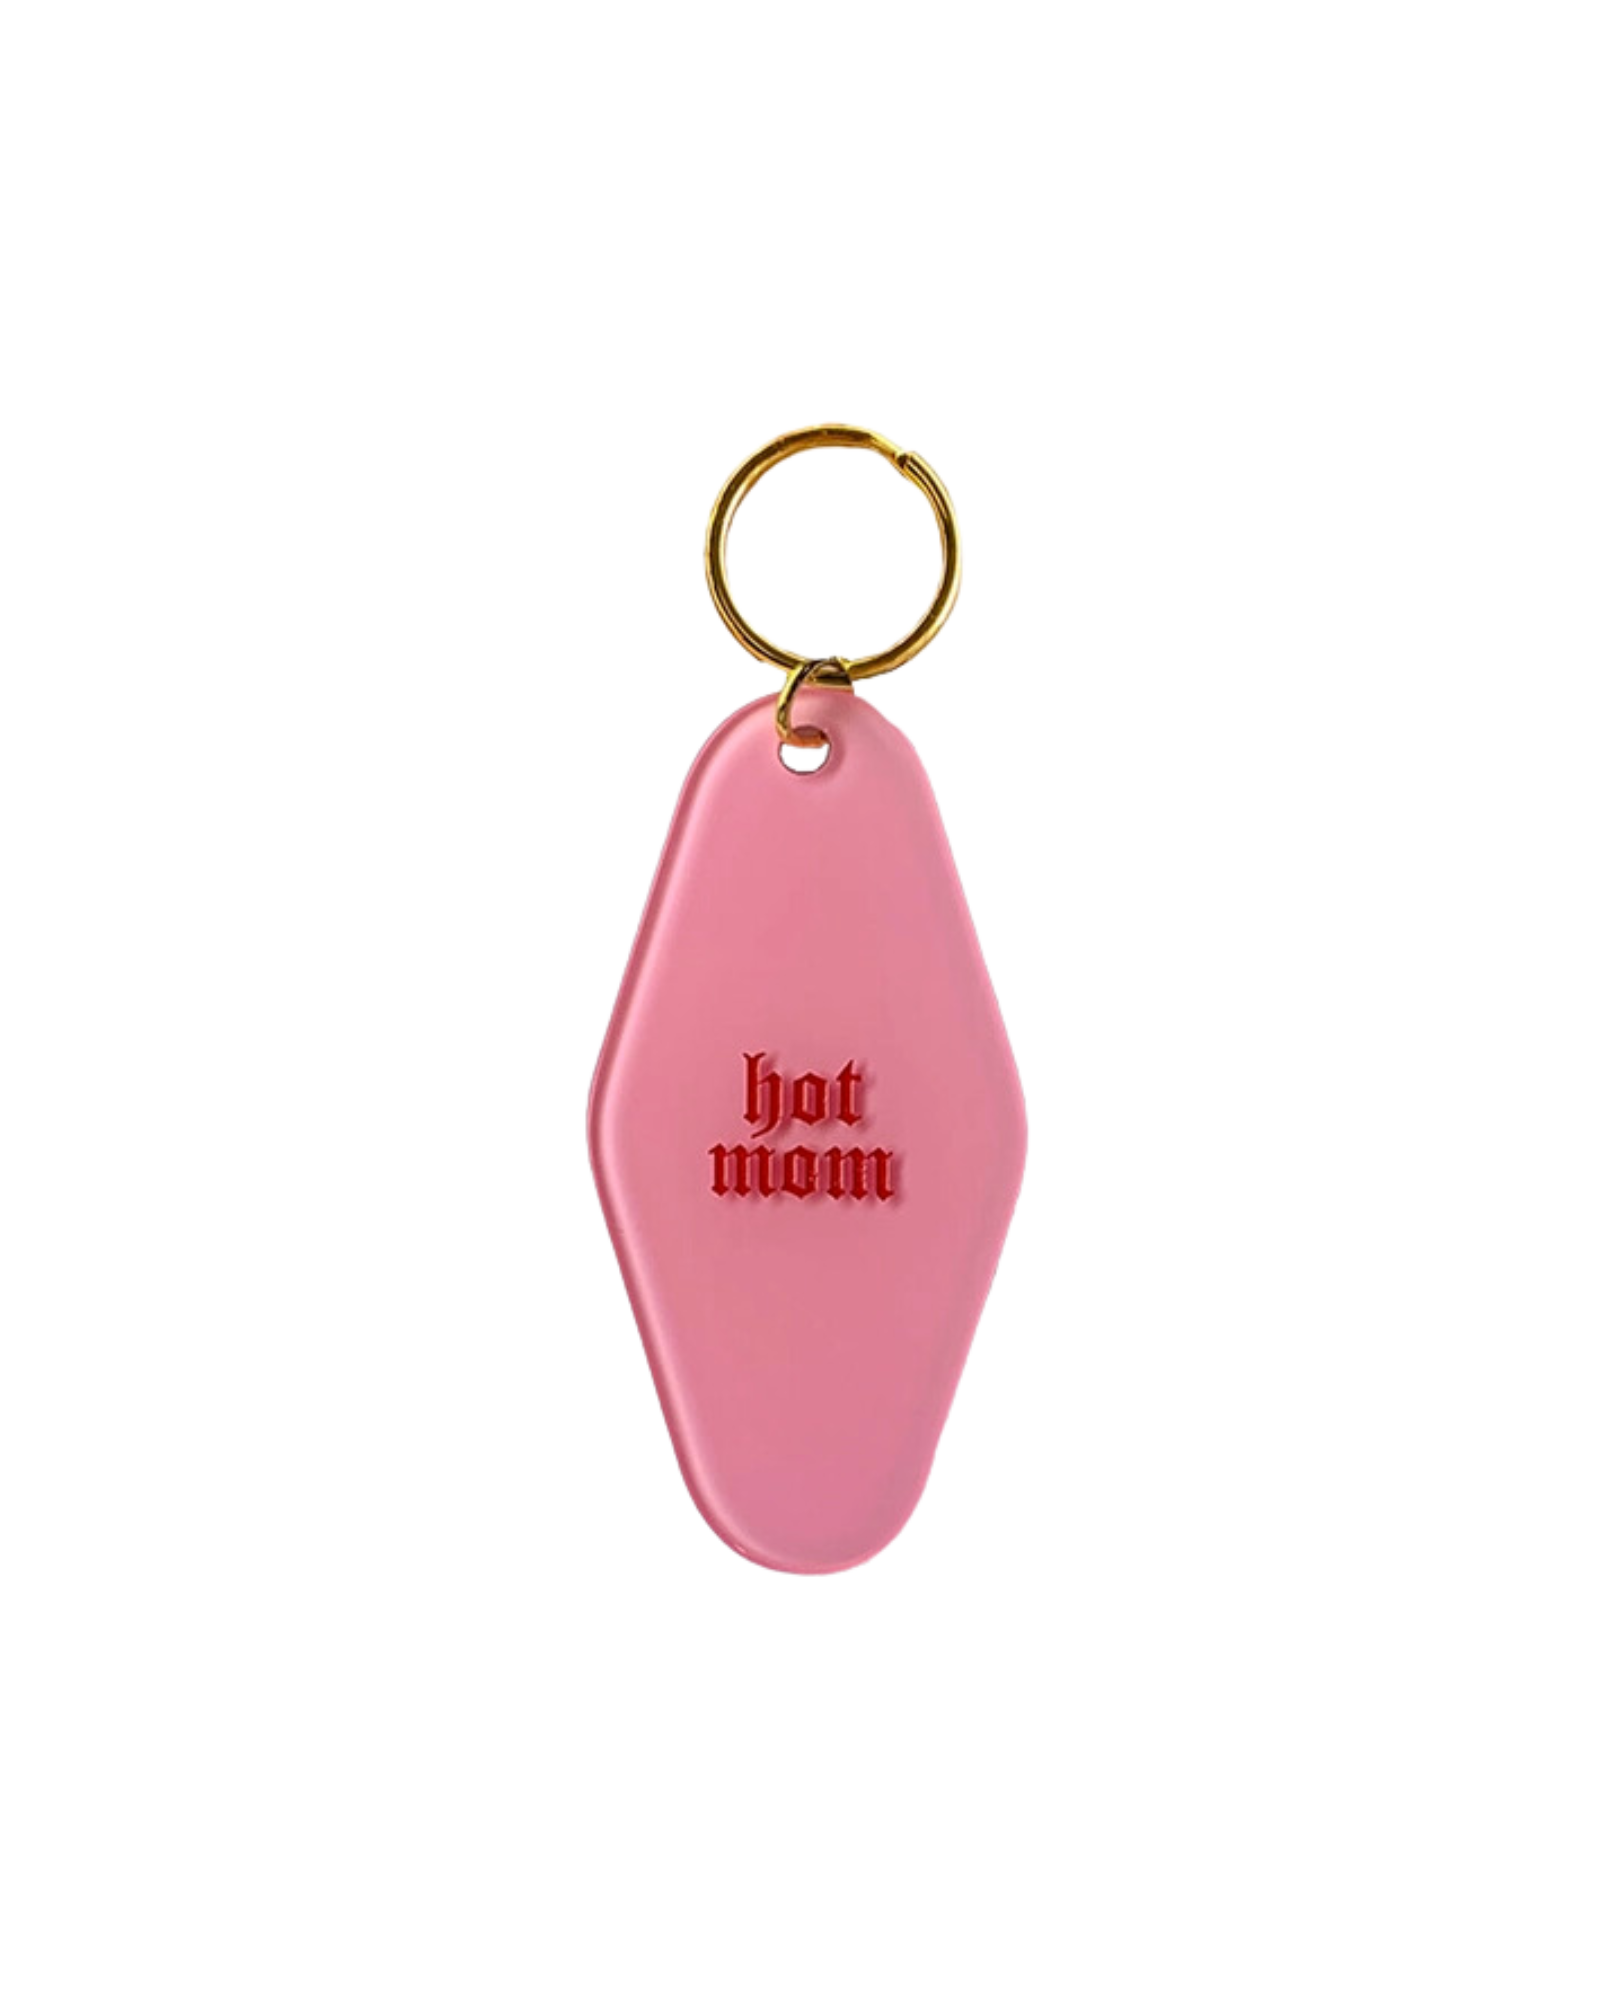 Hot Mom Keychain